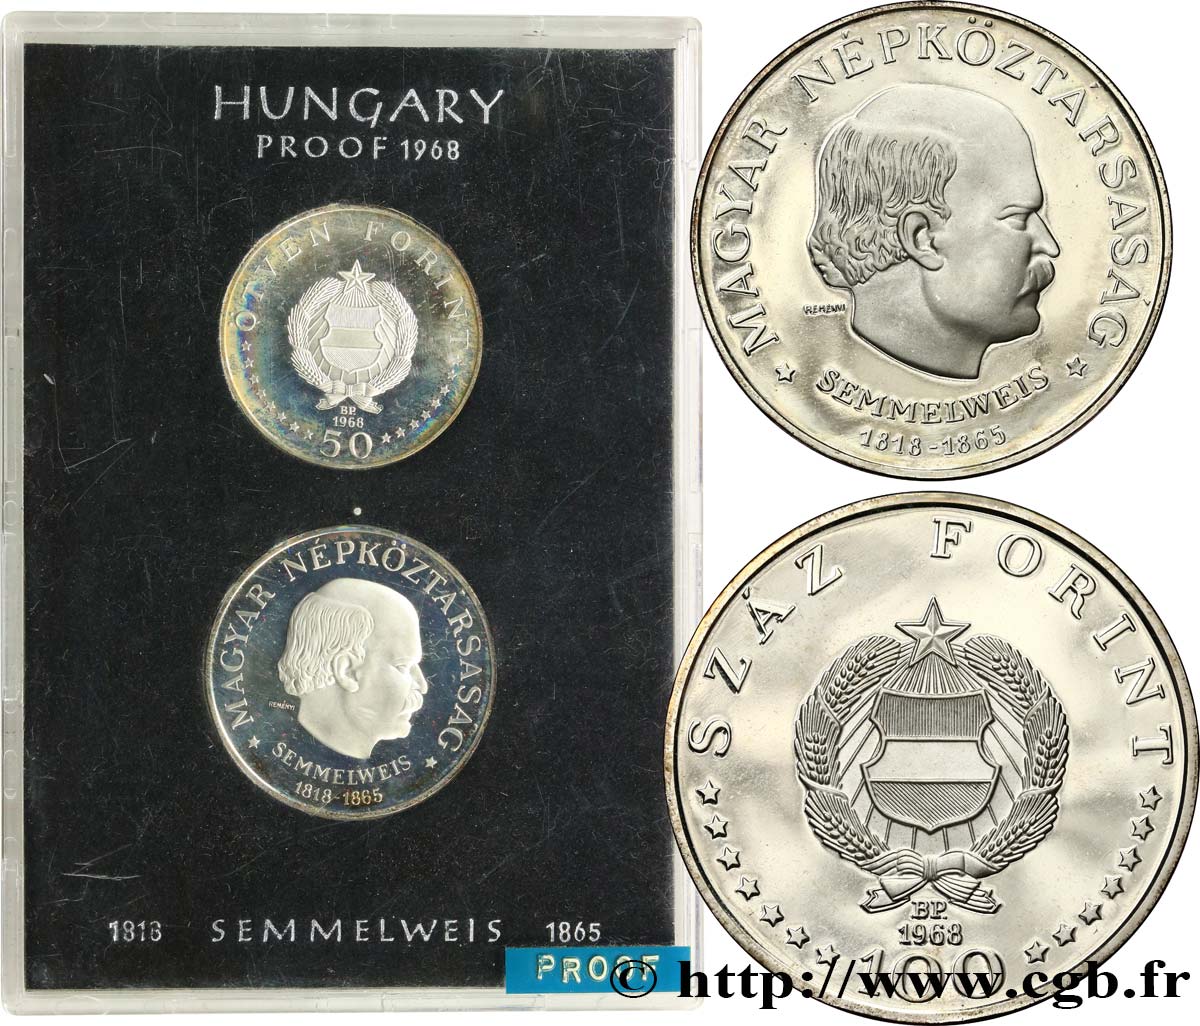 HUNGARY Série Proof - 2 monnaies - Ignác Semmelweis 1968 Budapest Proof set 